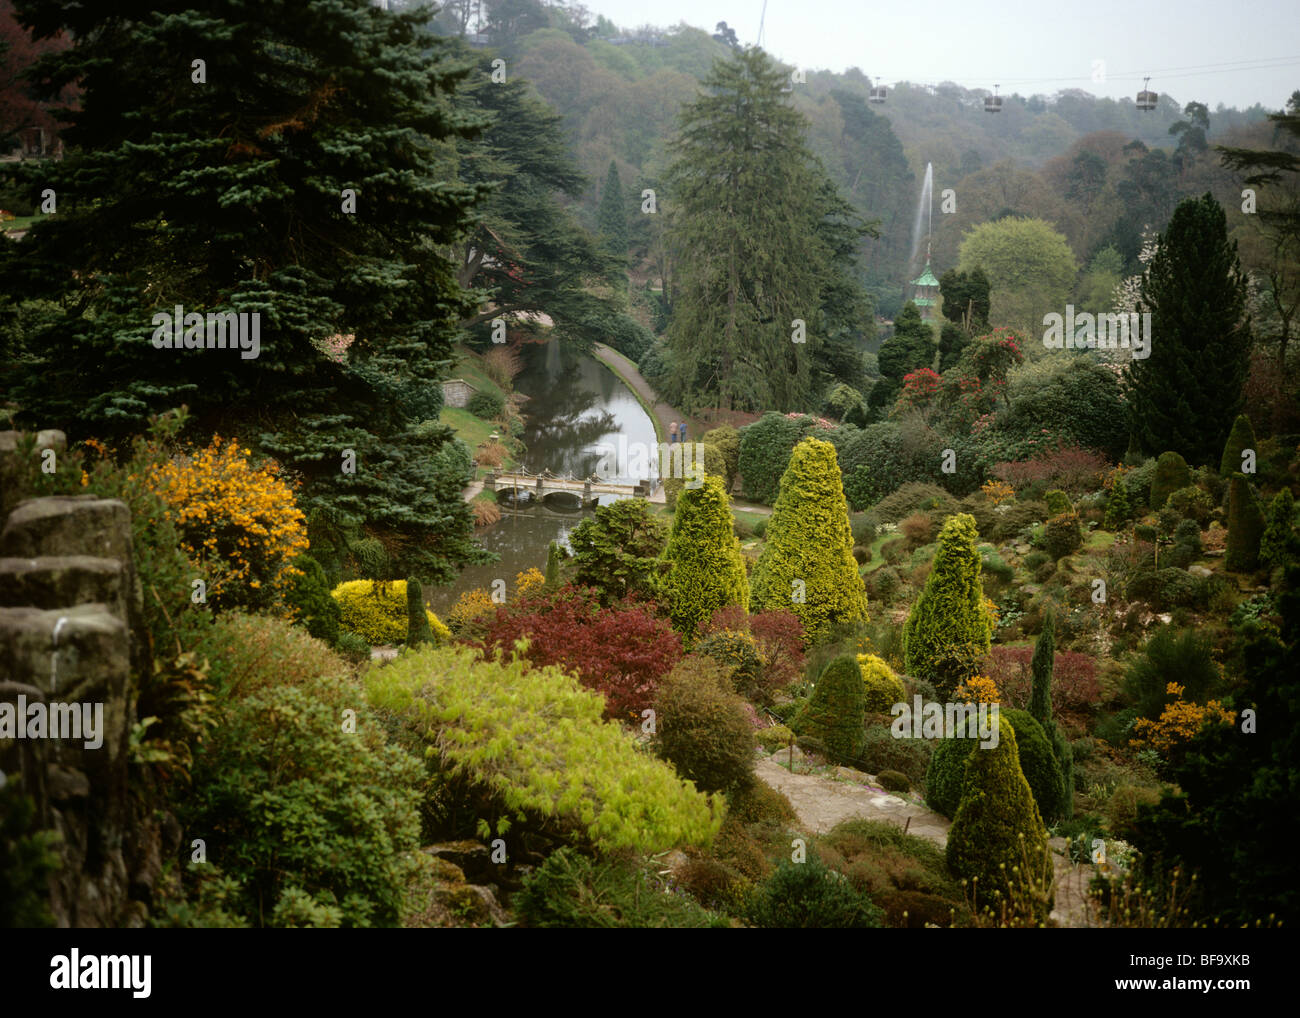 UK, England, Staffordshire, Alton Towers gardens Stock Photo